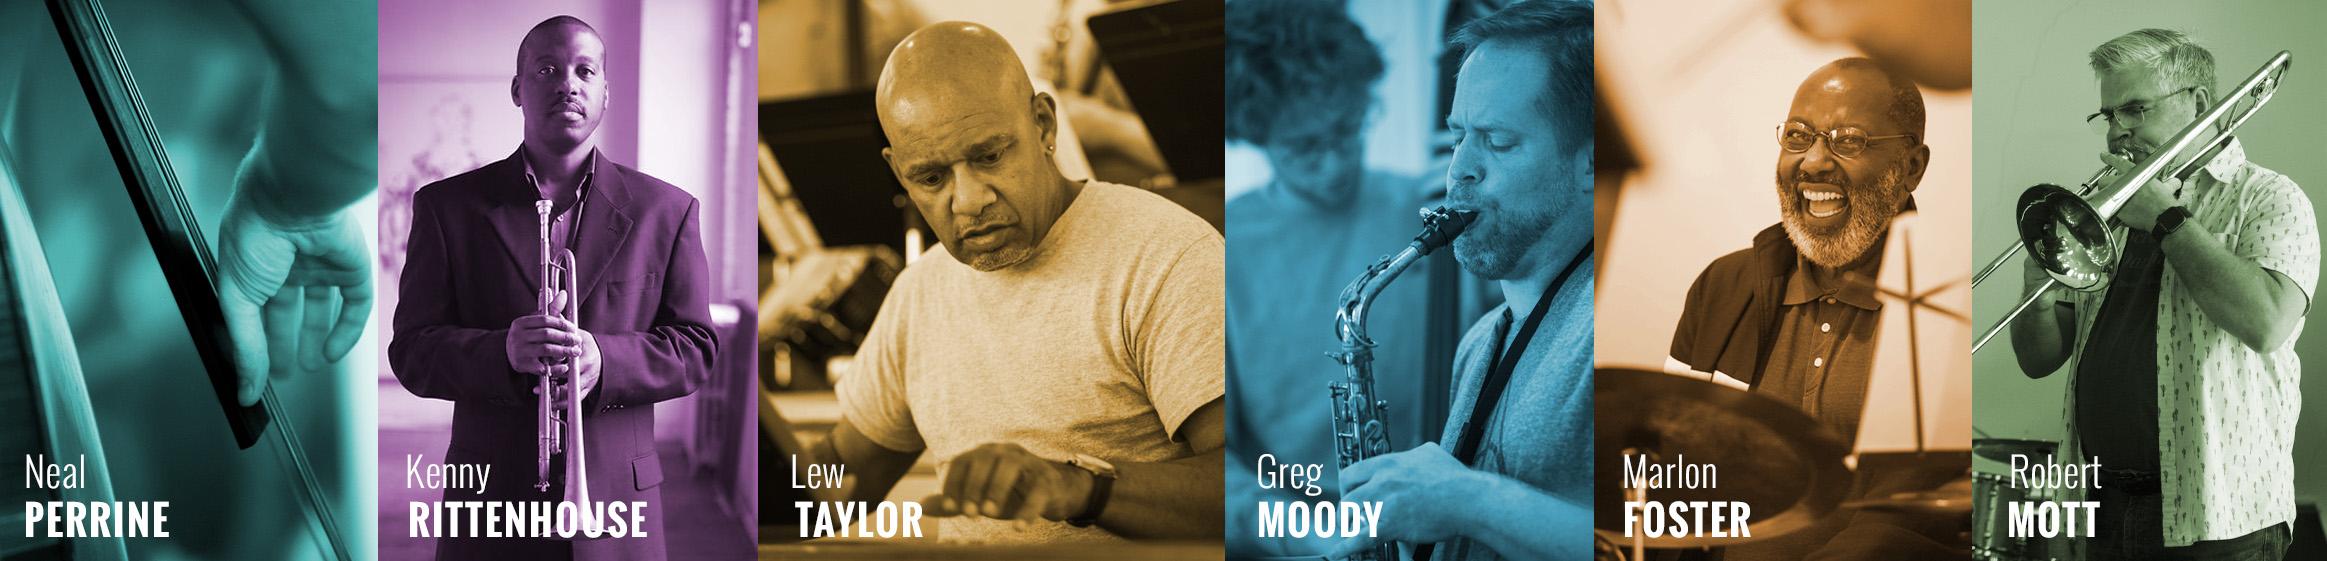 Jazz sextet 2024 personnel: Neal Perrine, Kenny Rittenhouse, Lew Taylor, Greg Moody, Marlon Foster, Robert Mott